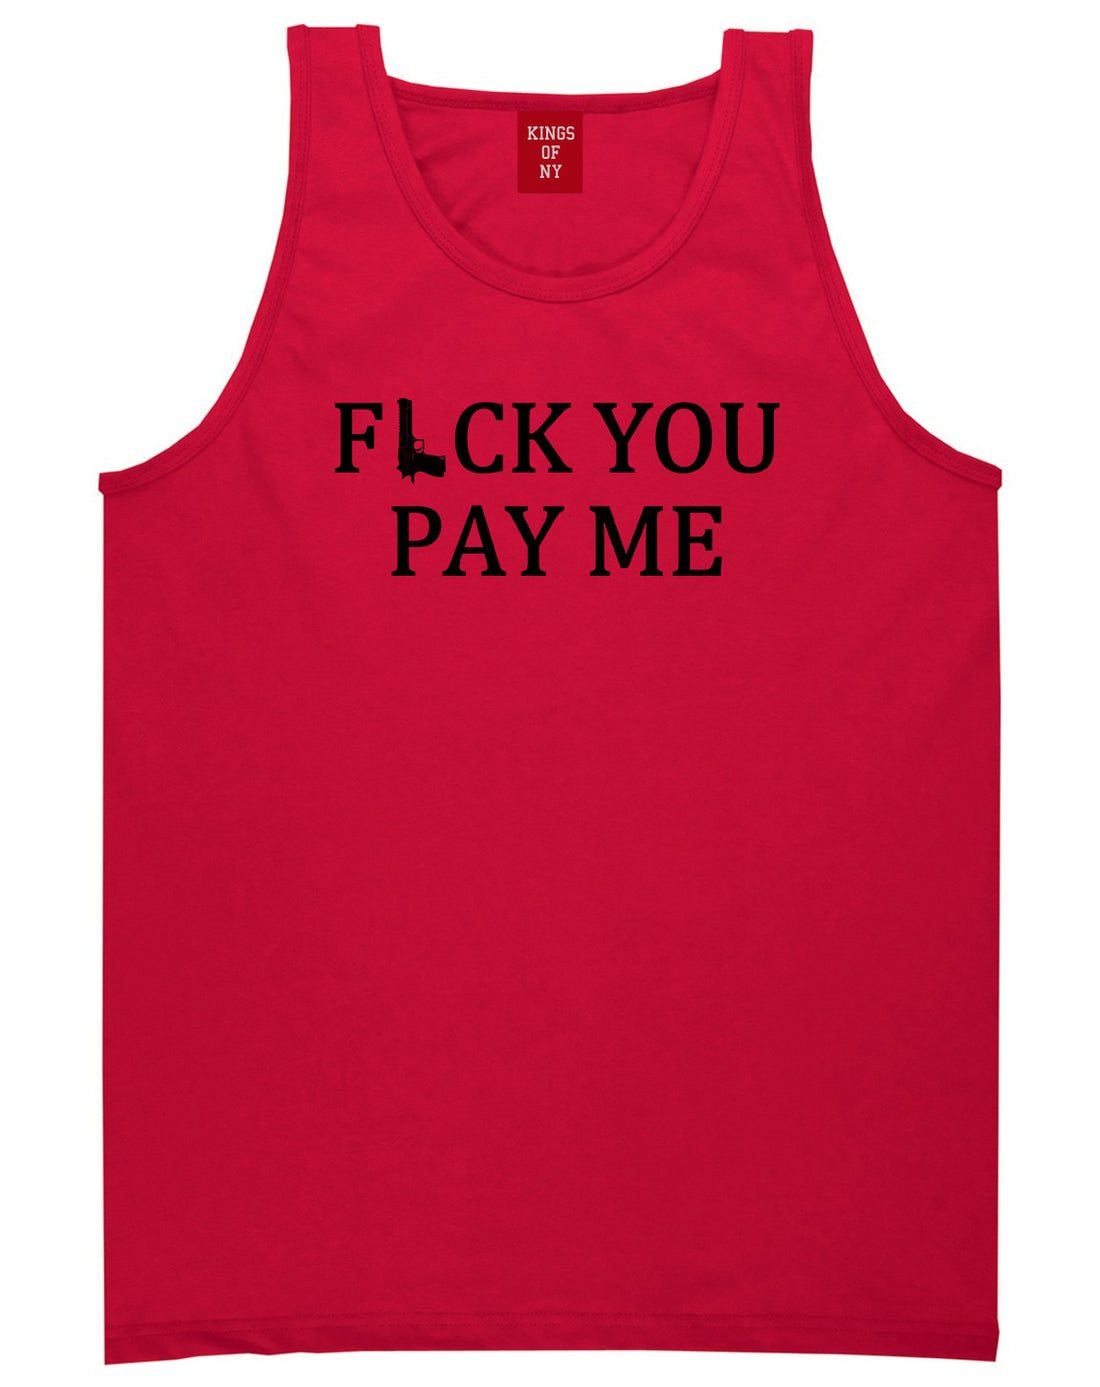 Fck You Pay Me Gun Mens Tank Top Shirt Red by Kings Of NY